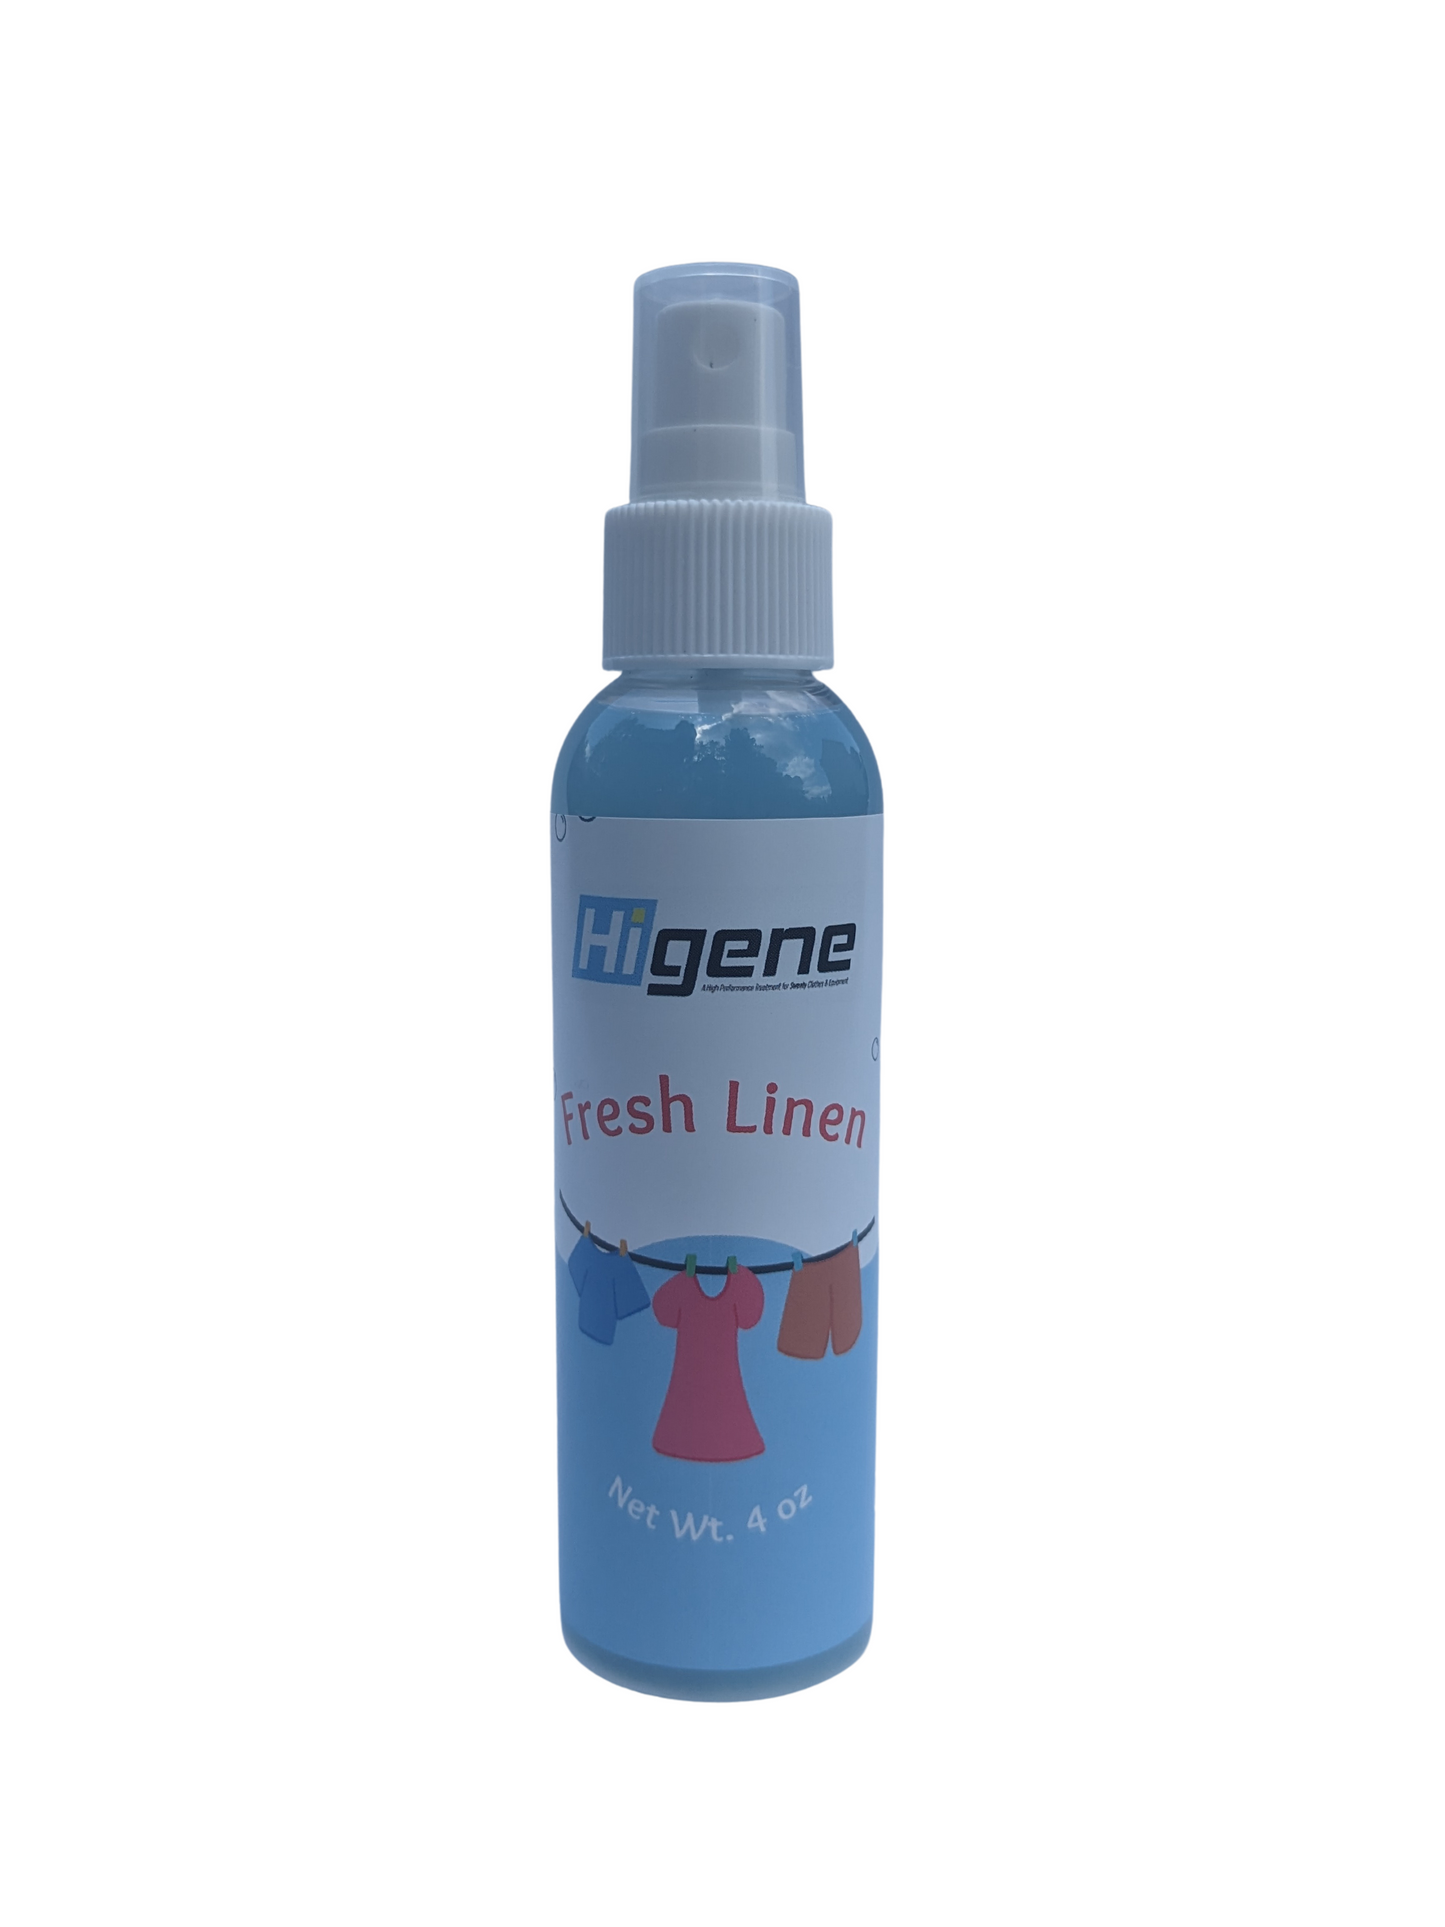 Higene - Fresh Linen laundry spray